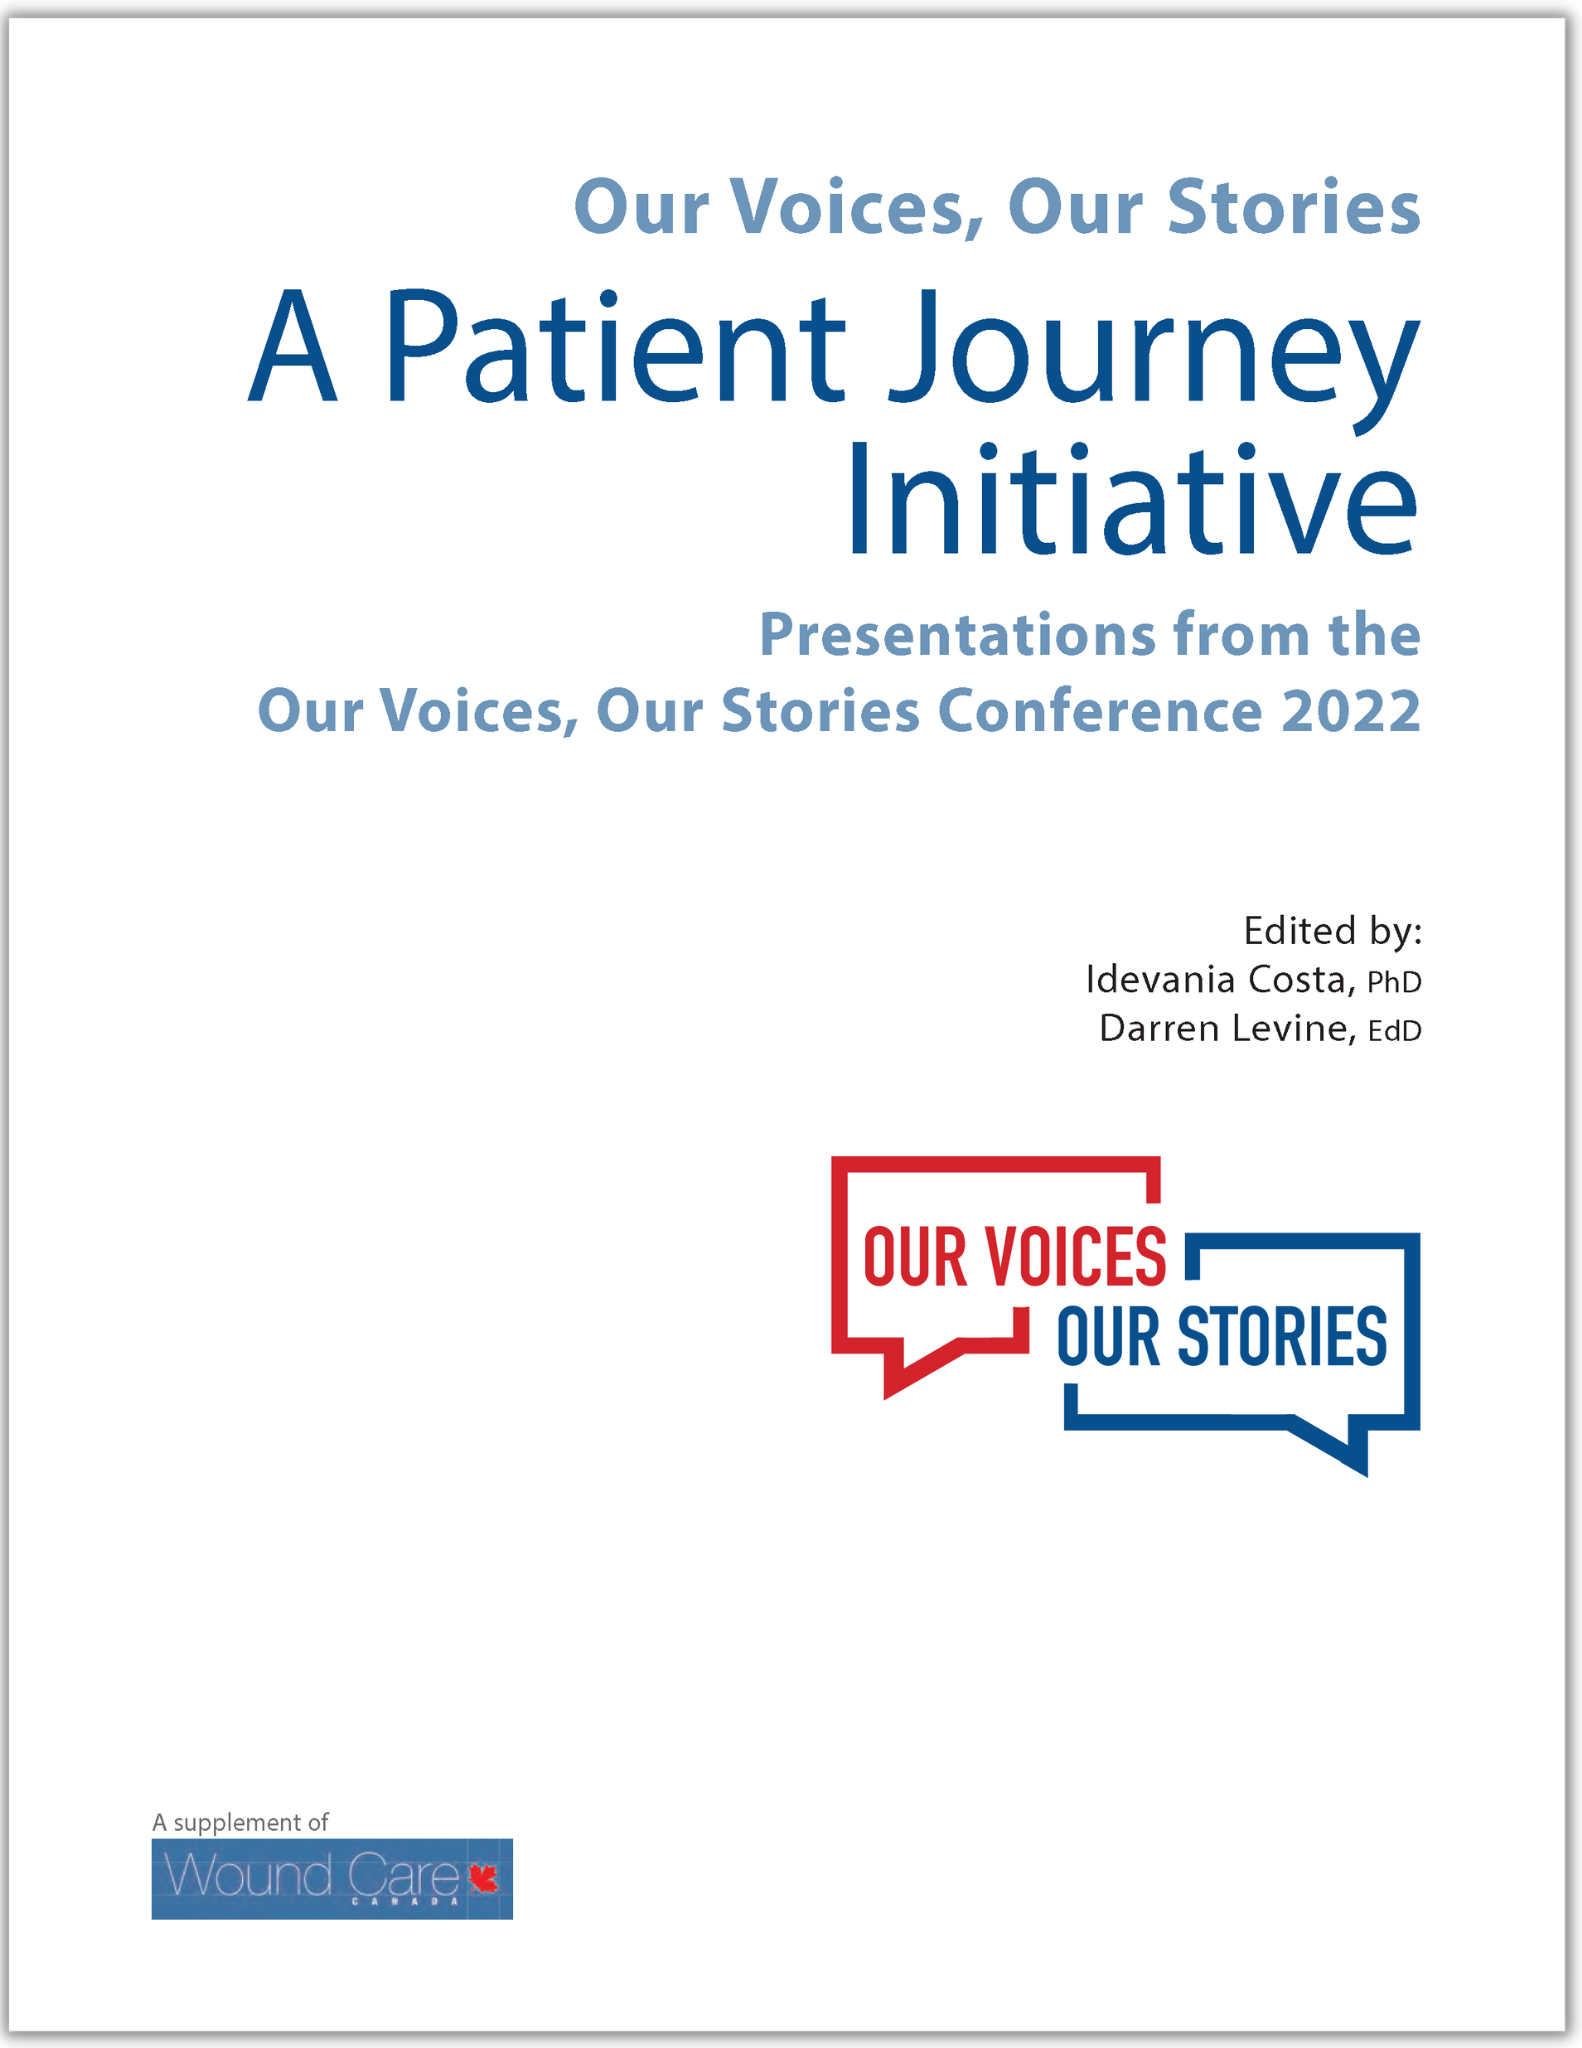 Our Voices, Our Stories: A Patient Journey Initiative